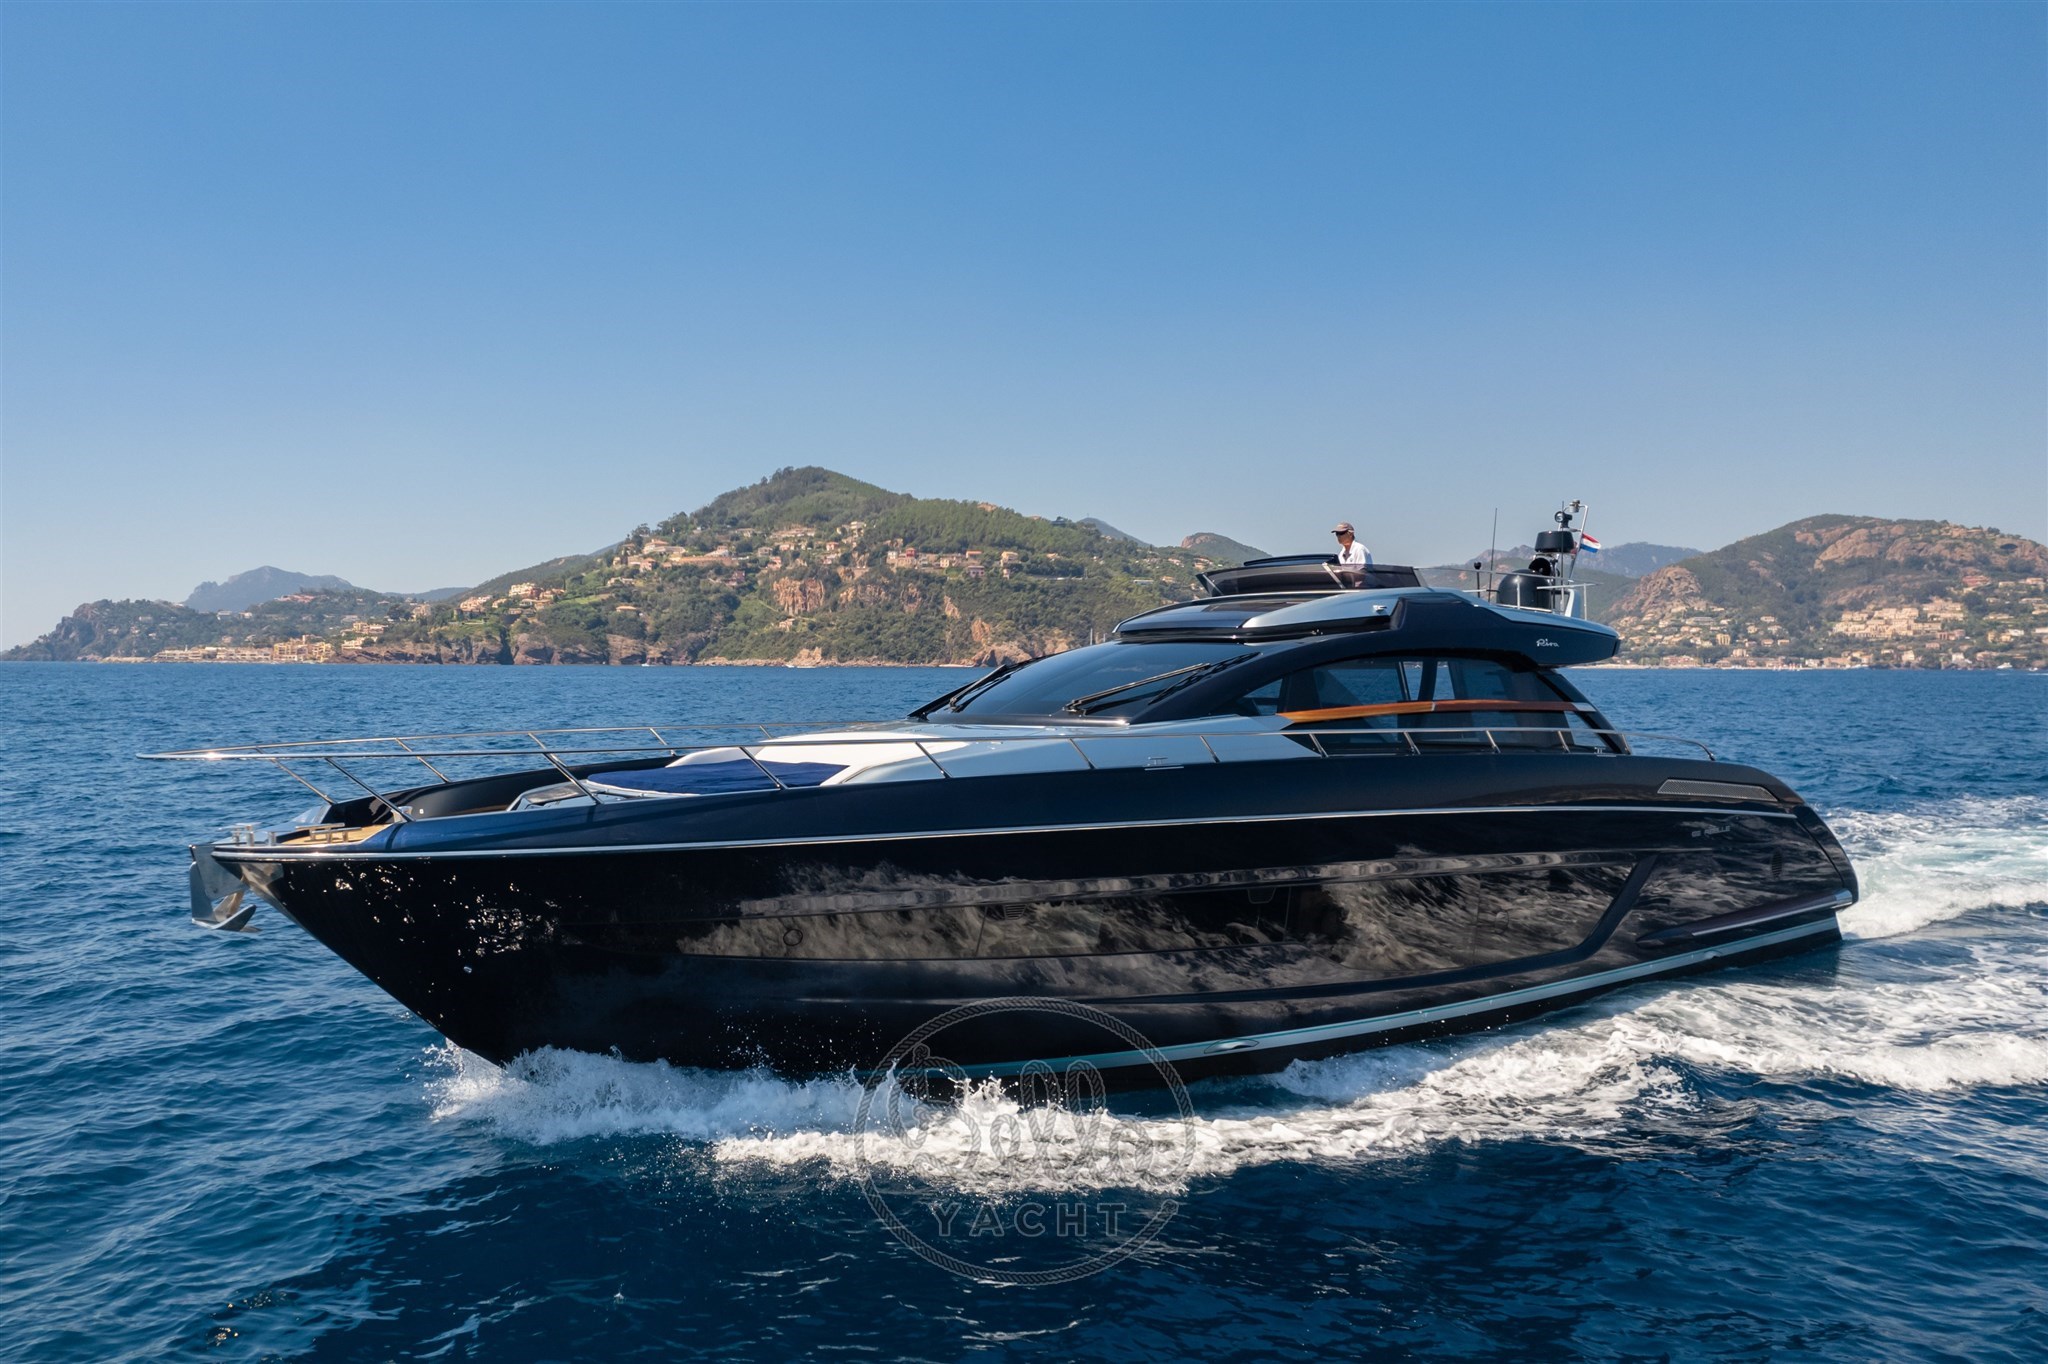 Riva Ribelle 66 d'occasion a vendre, Bella Yacht, Cannes, Antibes, Saint-Tropez, Monaco (1)